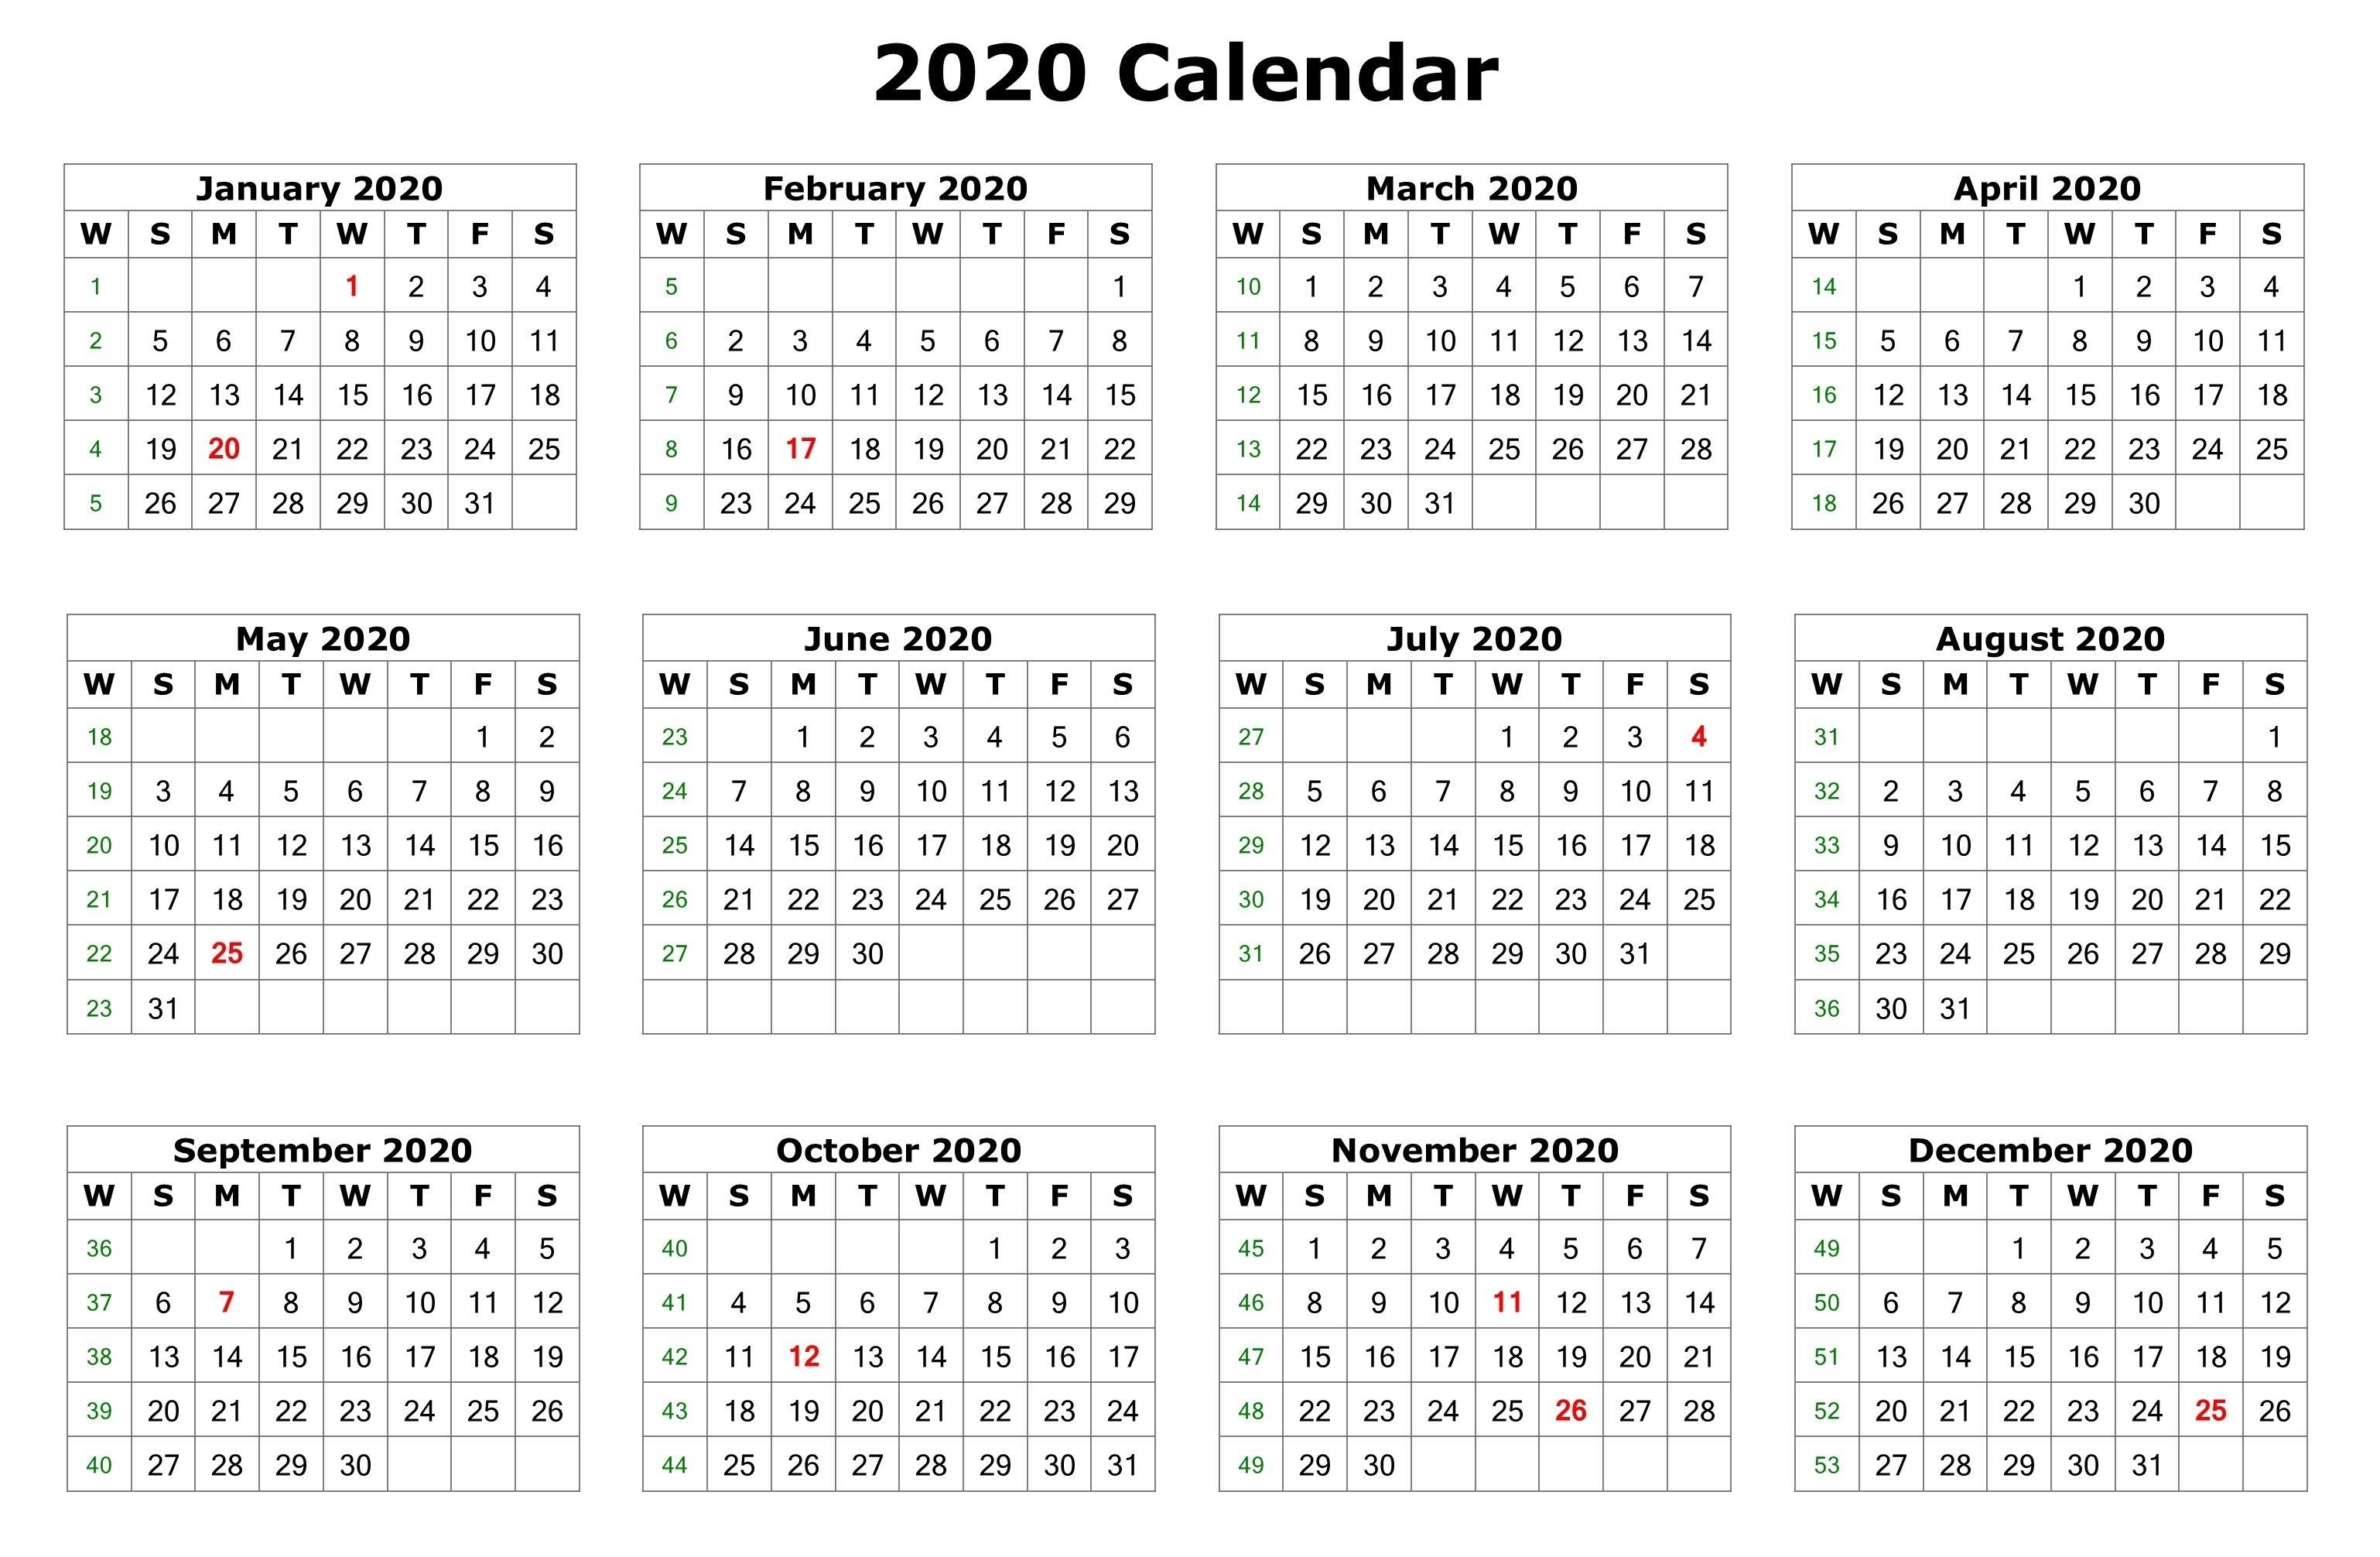 2020 One Page Calendar Printable | Calendar Printables  2020 Calendar Printable One Page